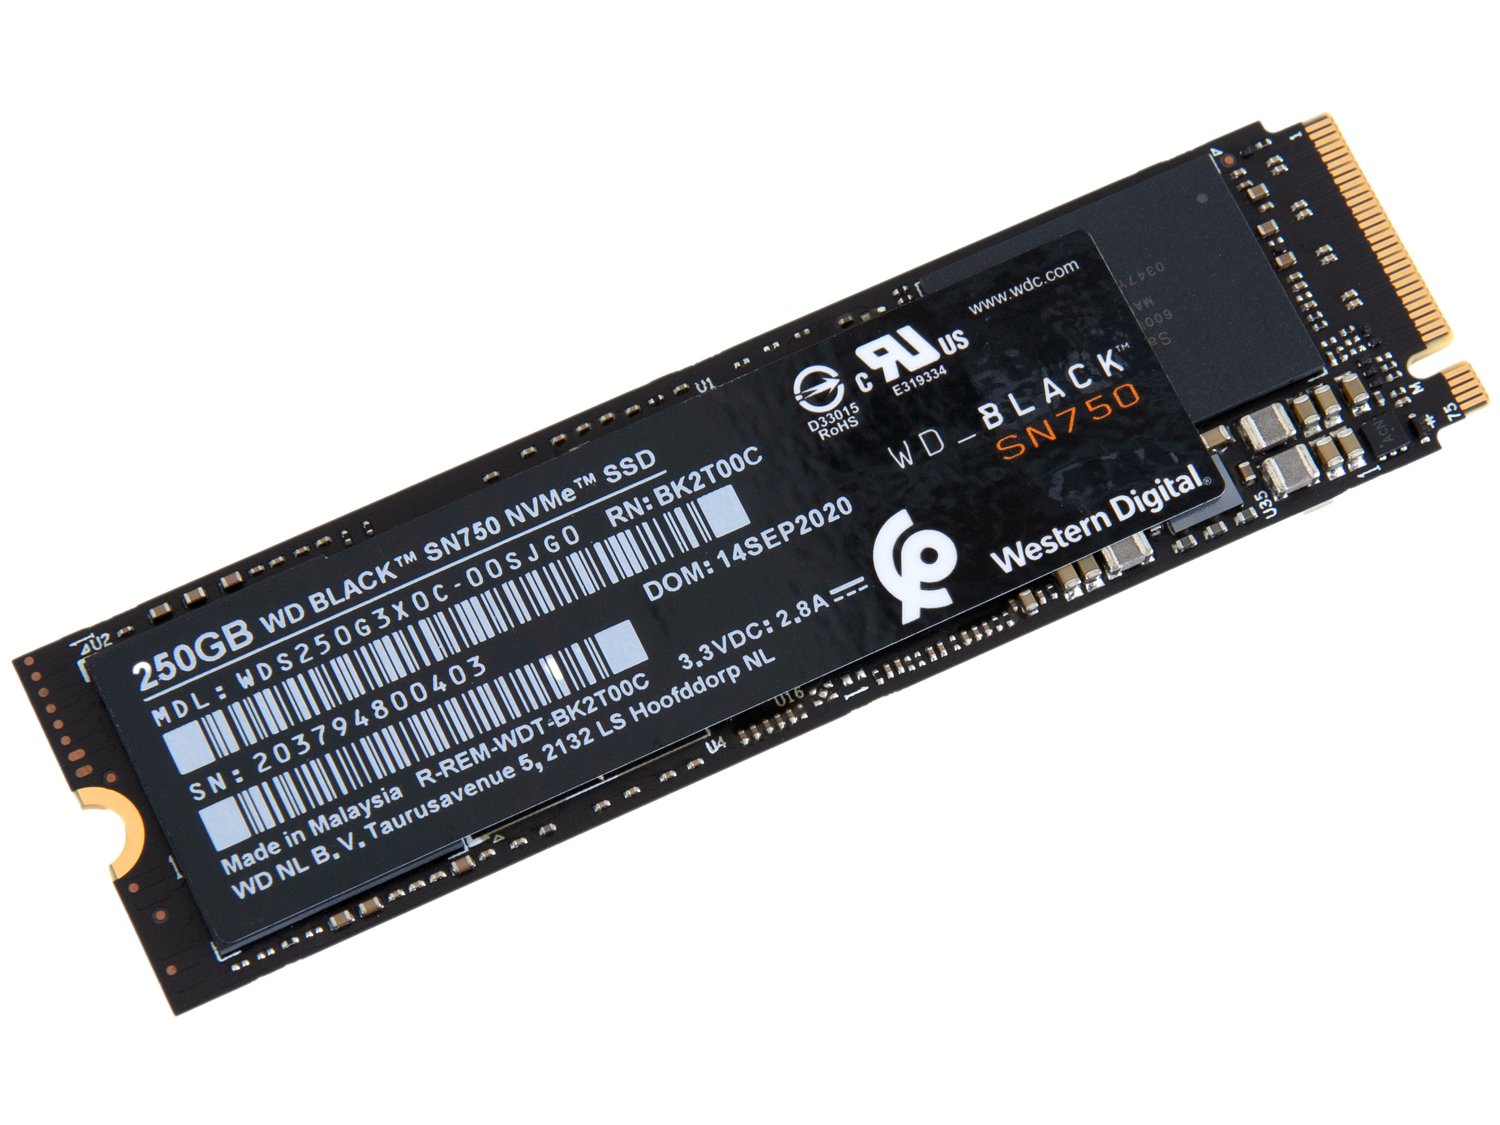 SSD Western Digital Black 250GB NVMe PCIe - M.2 2280 Leitura 3100MB/s e Gravação 1600MB/s - 2